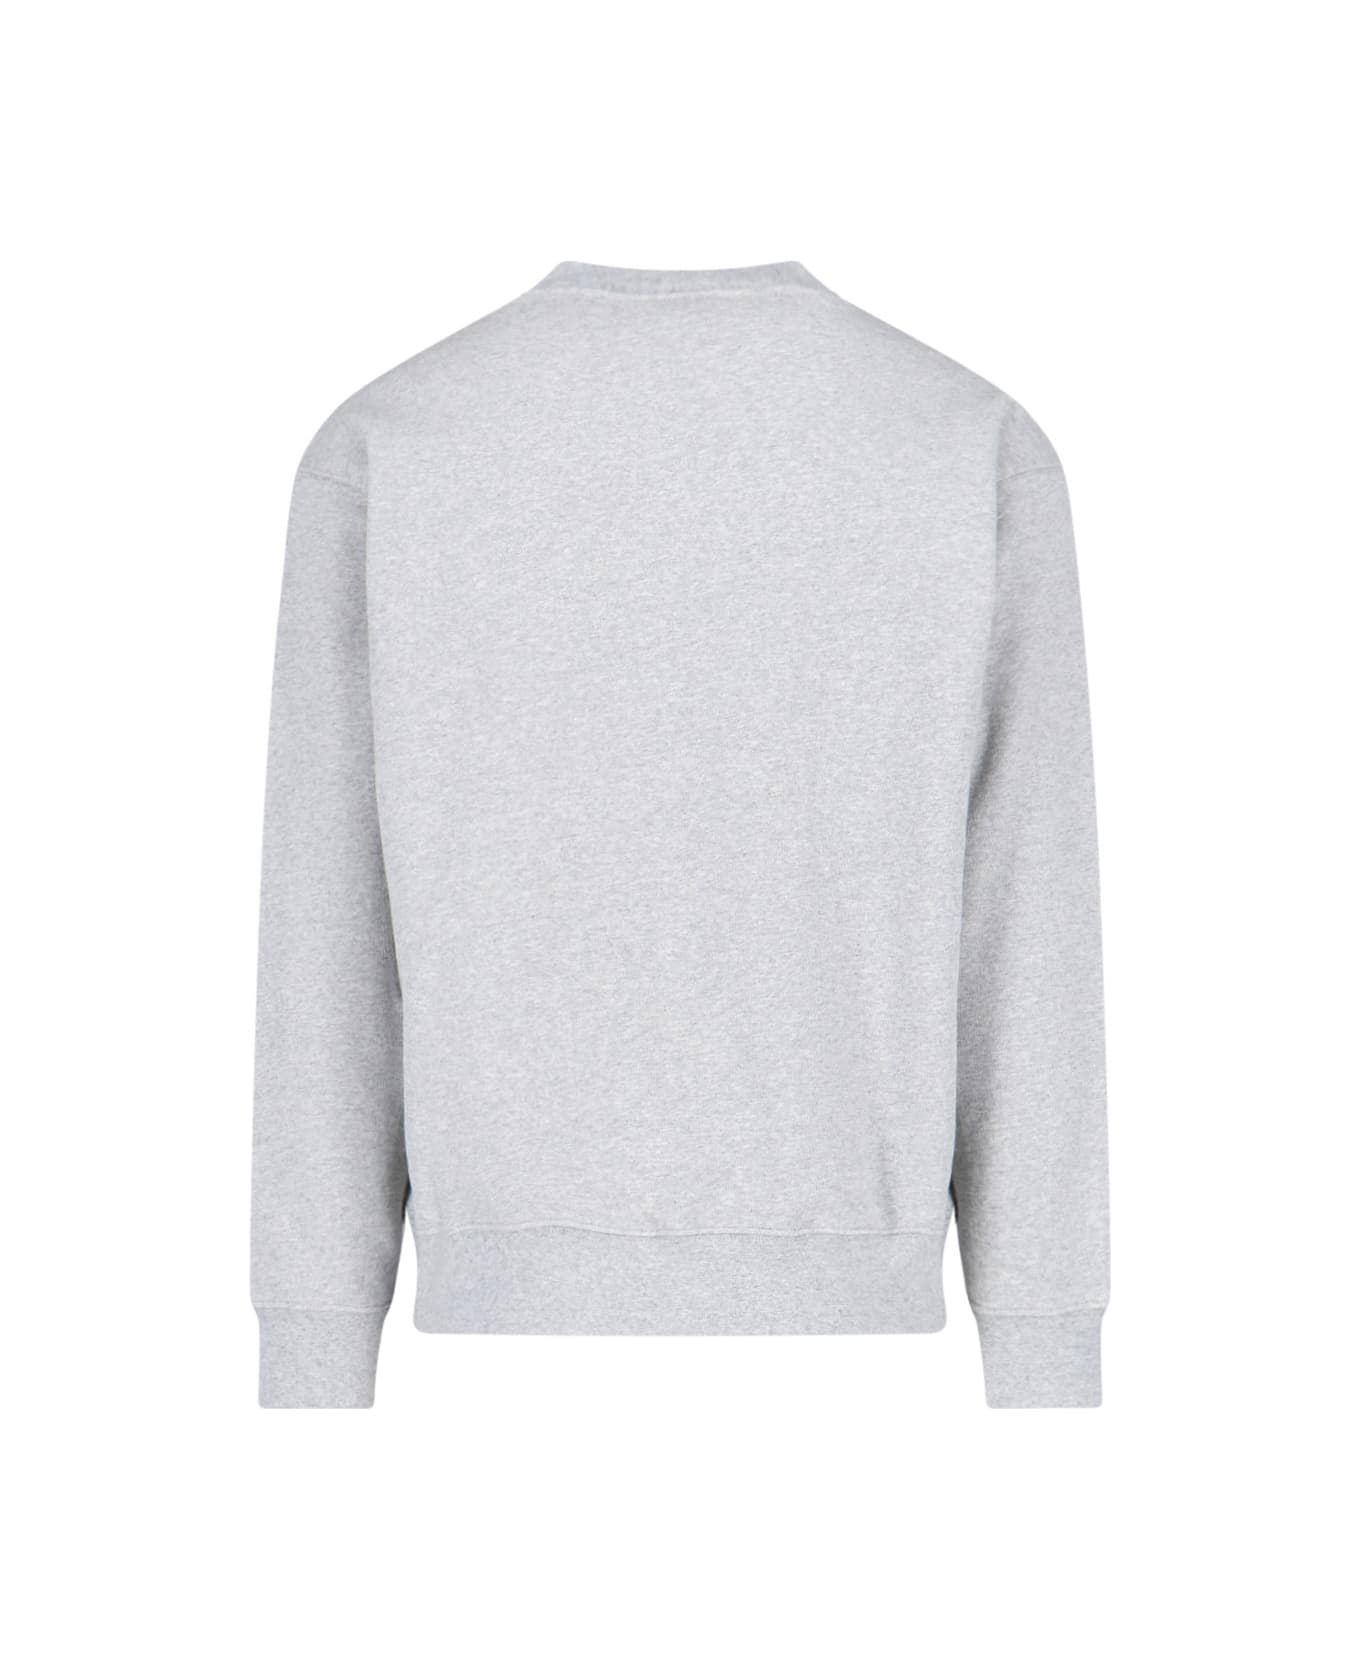 Dime 'bff' Sweatshirt - Gray